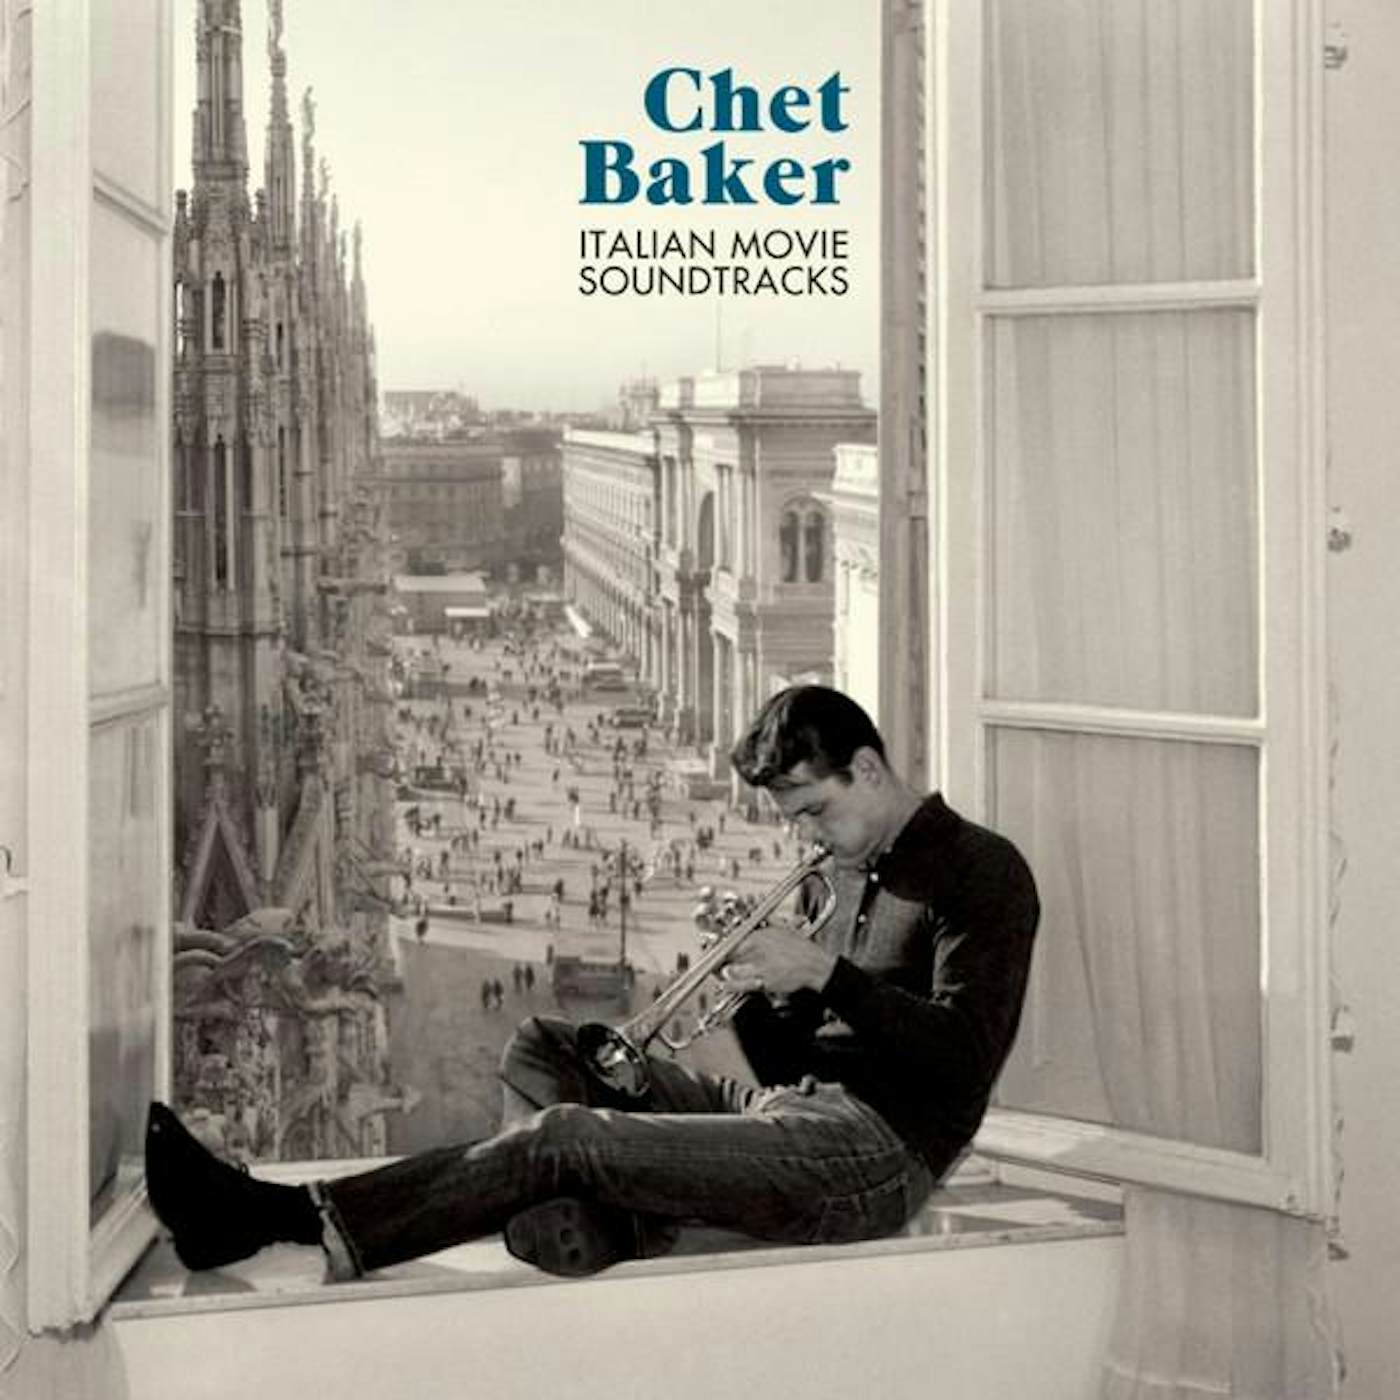 Chet Baker ITALIAN MOVIE SOUNDTRACKS (1 BONUS TRACK) (LIMITED 180G TRANSPARENT PURPLE VINYL/DMM MASTER) Vinyl Record